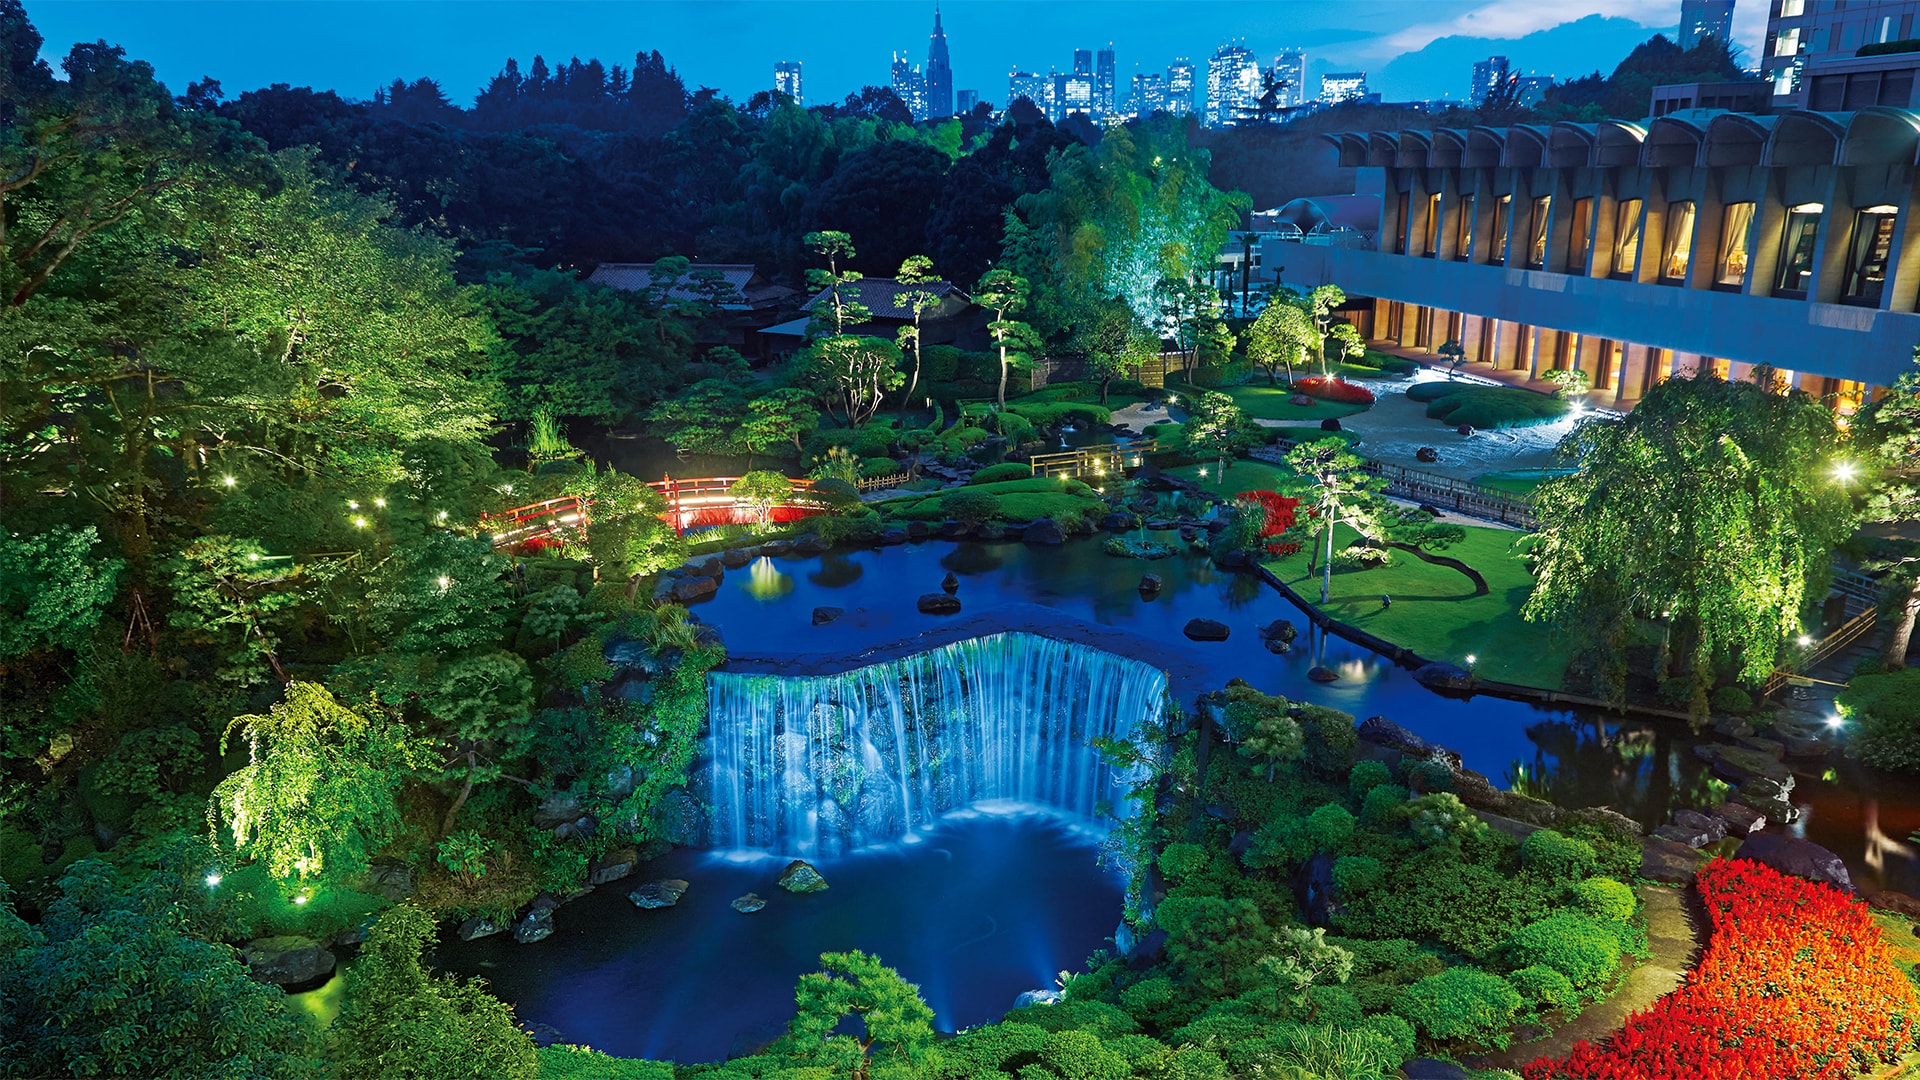 Night view photo of Japanese garden